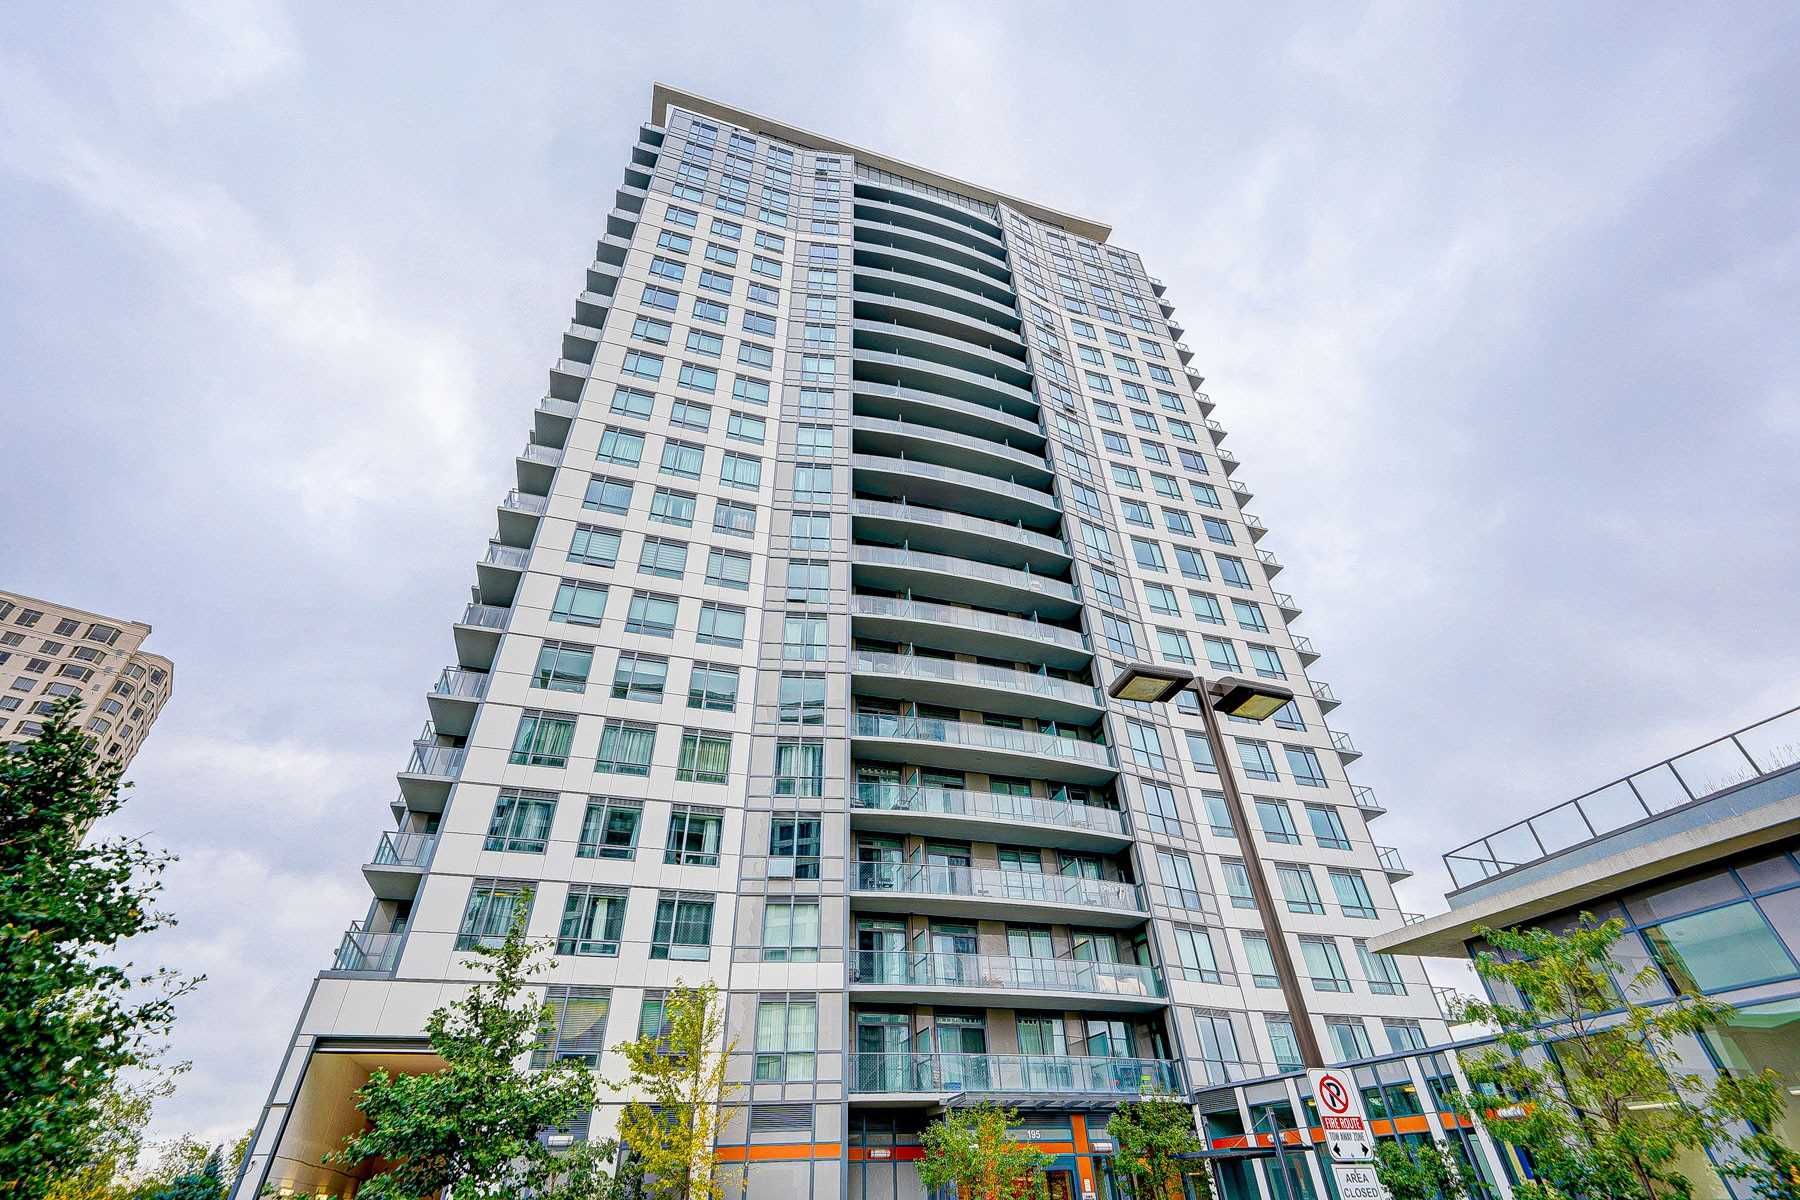 195 Bonis Ave. This condo at JOY Condos is located in  Scarborough, Toronto - image #2 of 3 by Strata.ca